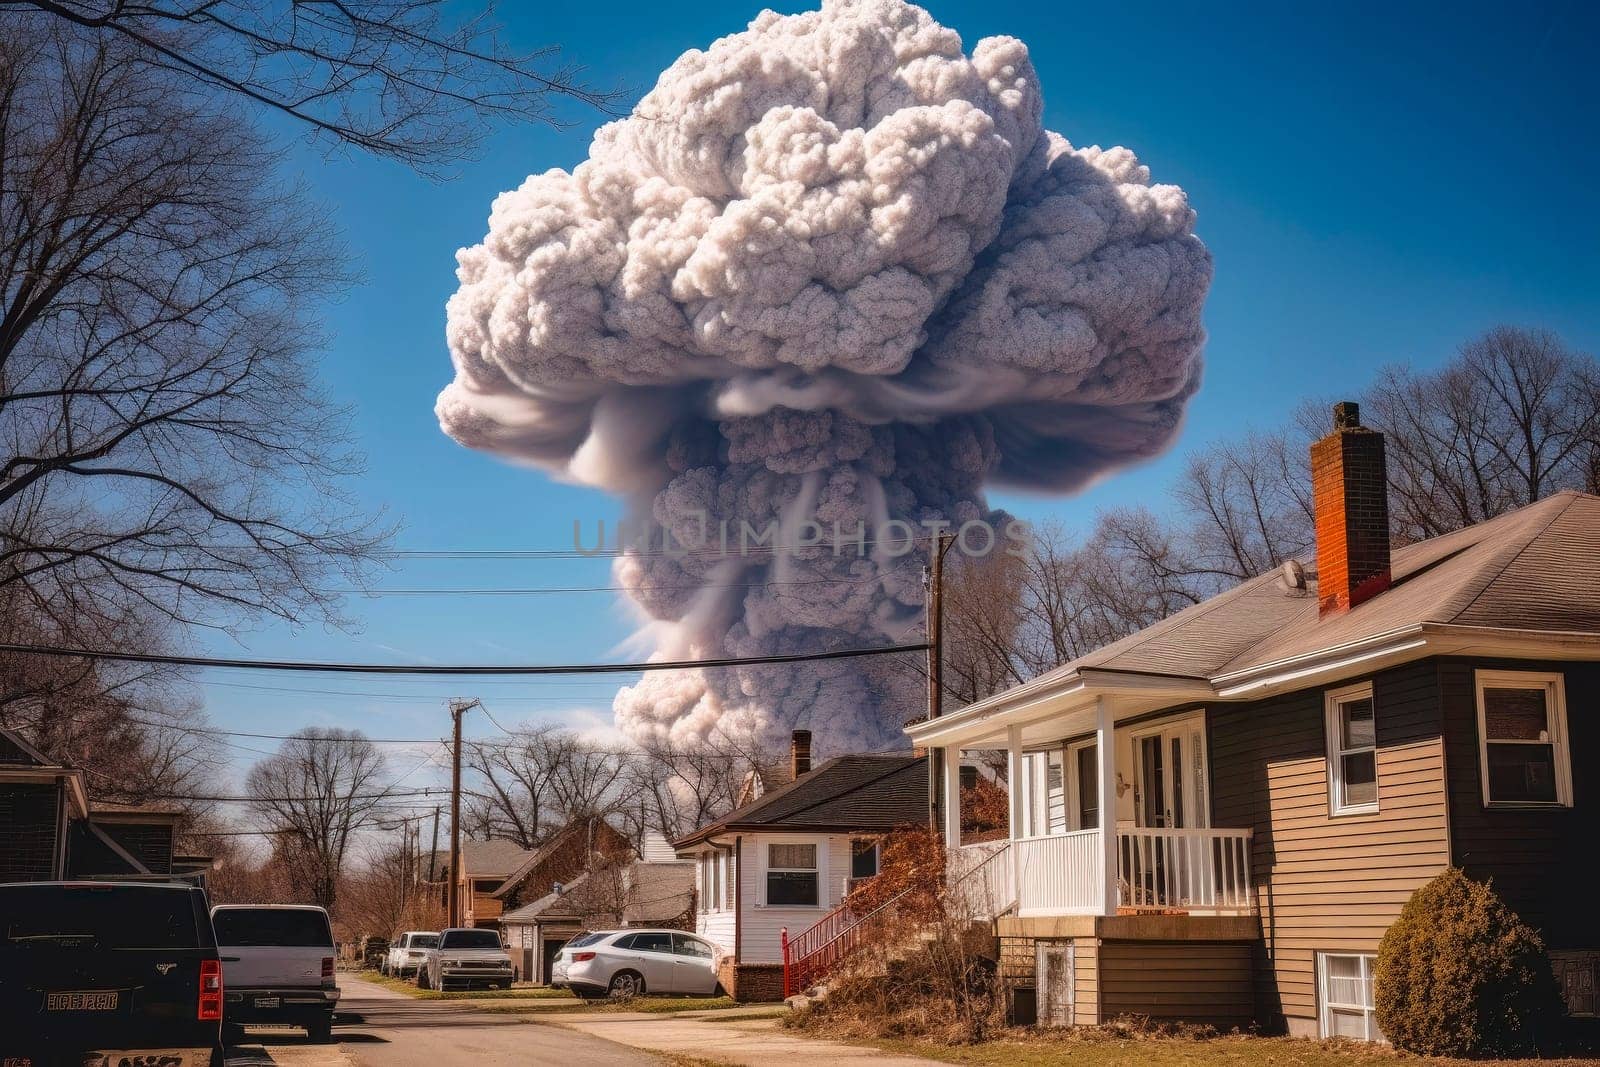 Atomic Blast: Destructive Power Unleashed by pippocarlot